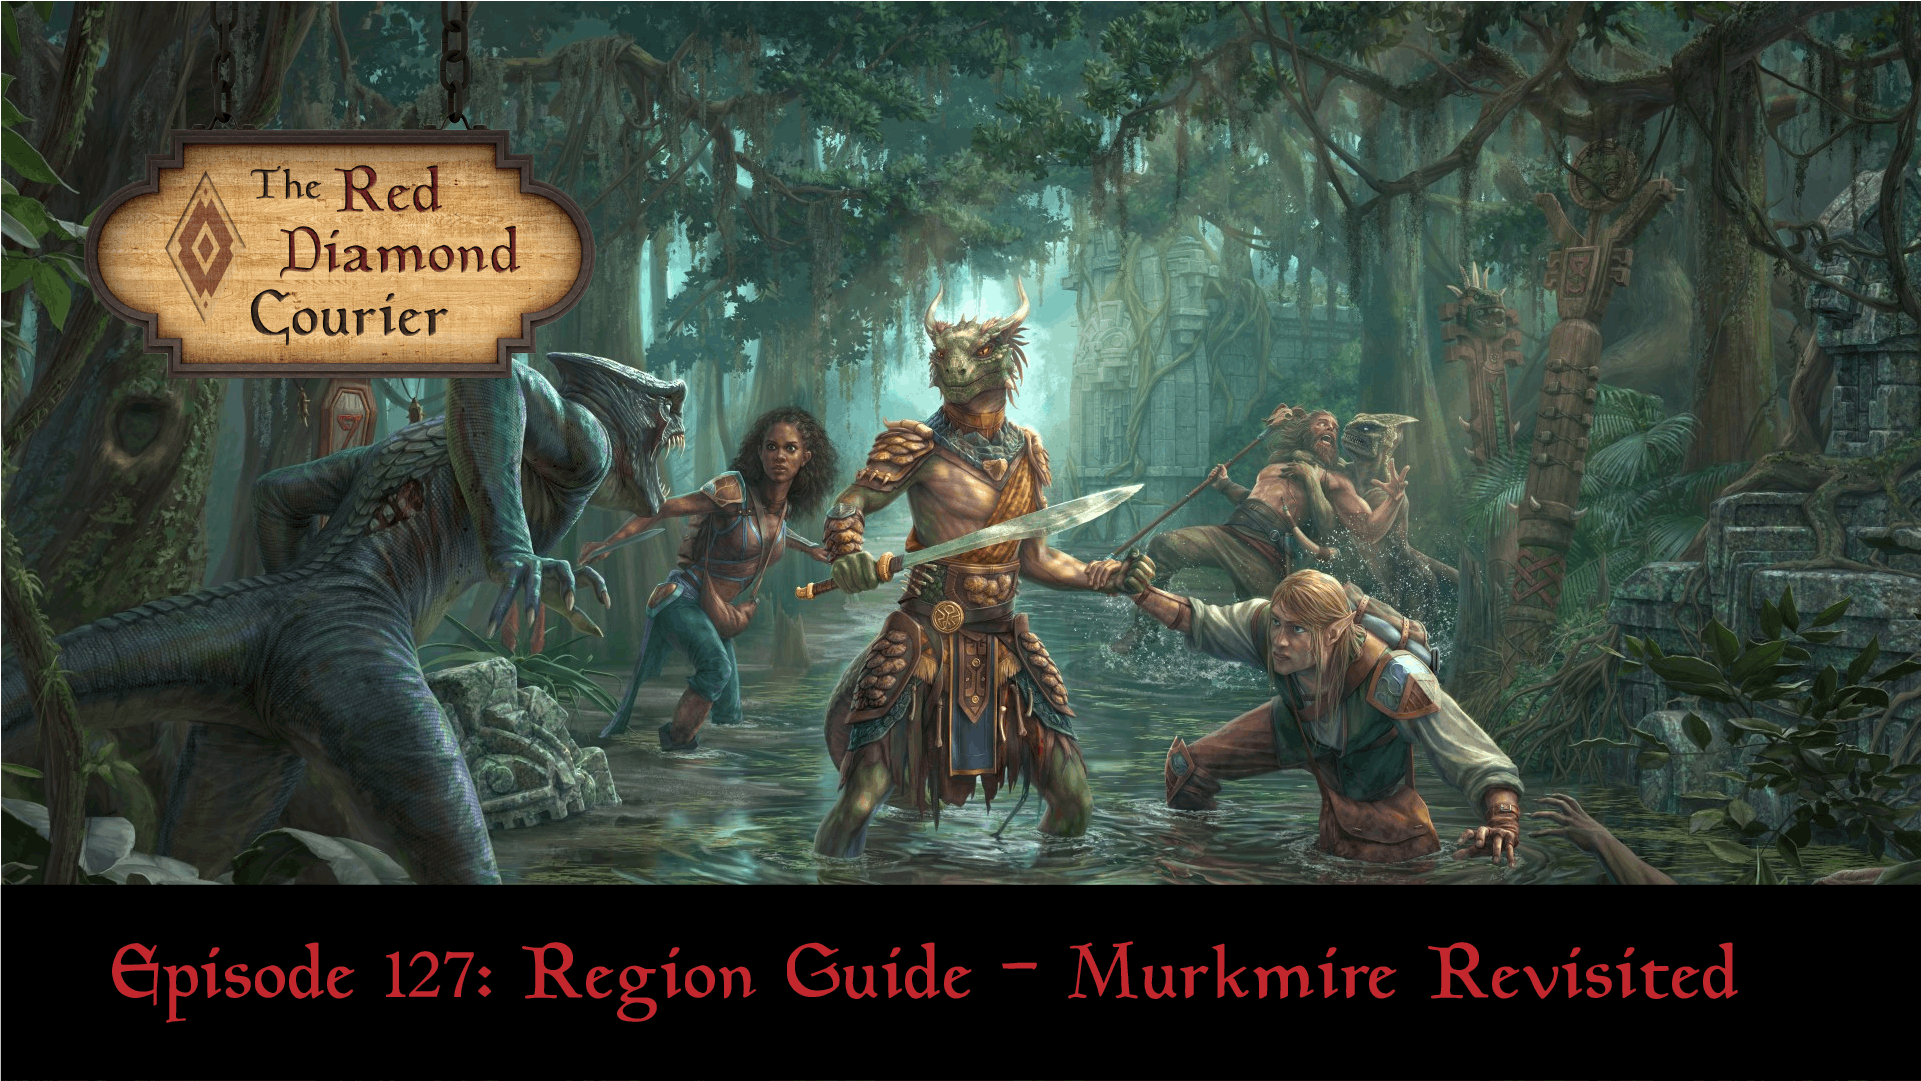 Episode 127: Region Guide - Murkmire Revisited